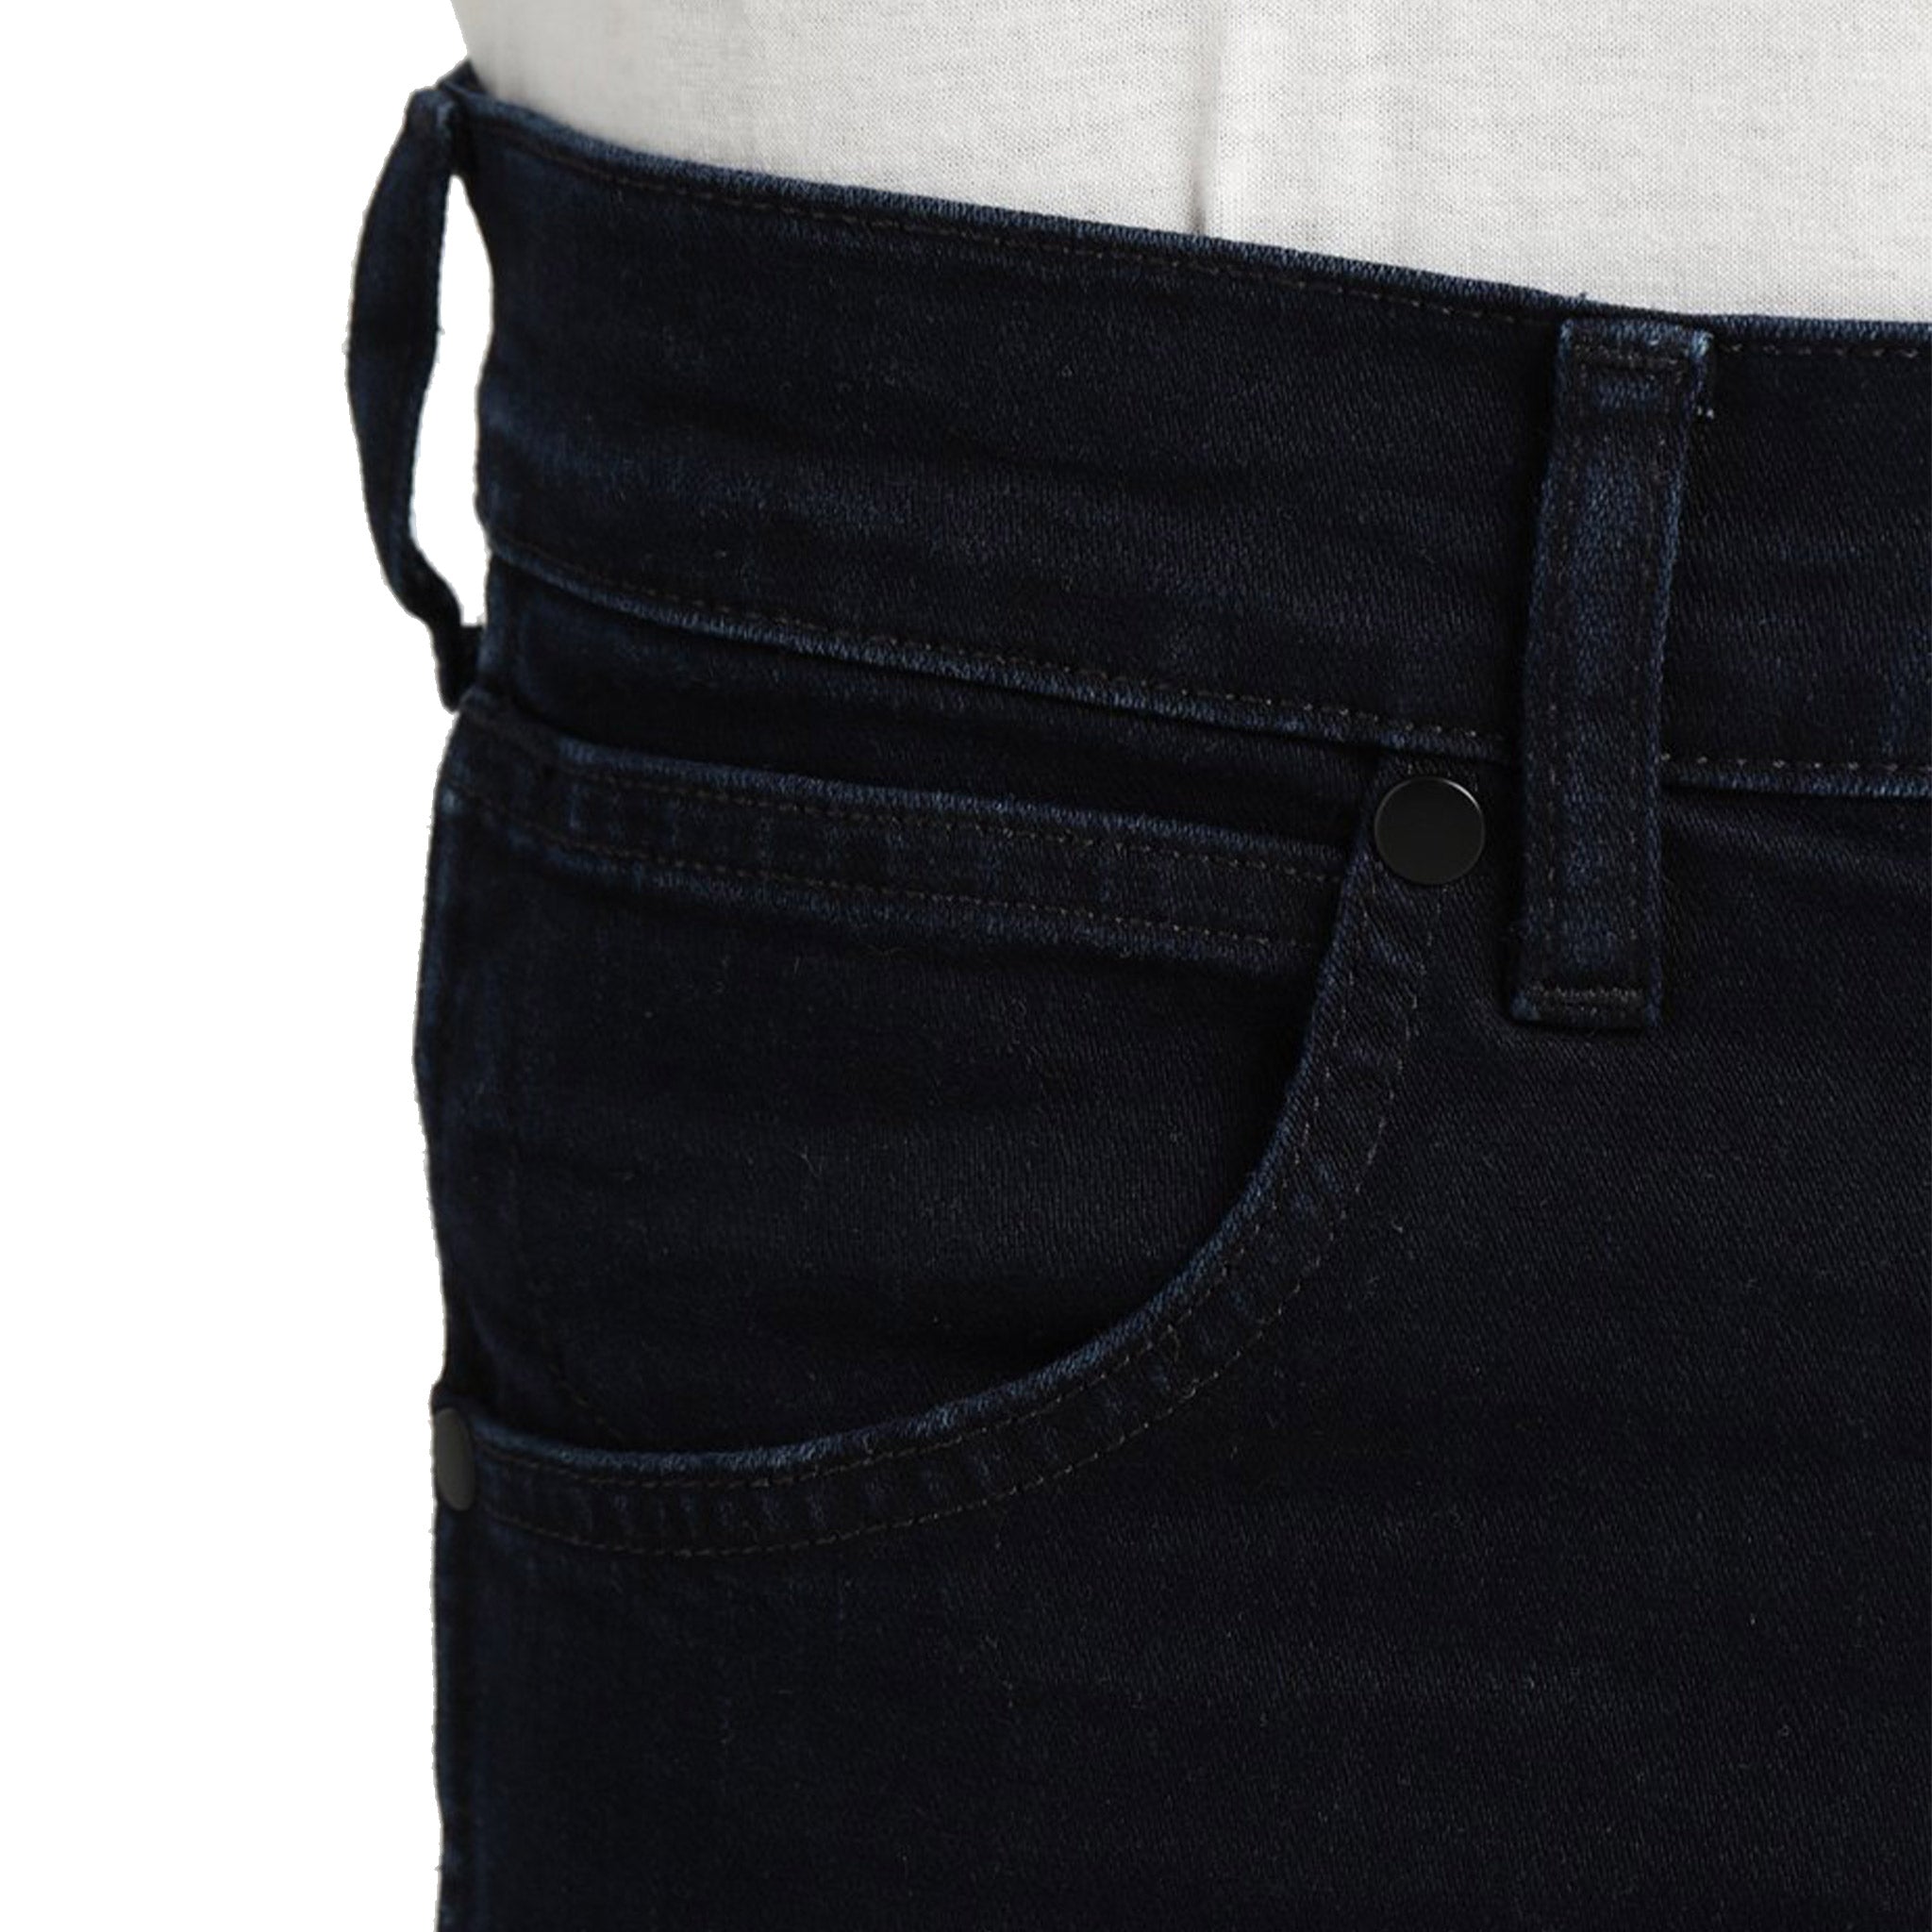 Wrangler Greensboro Stretch Jean in Black Back Close up of Front Pocket